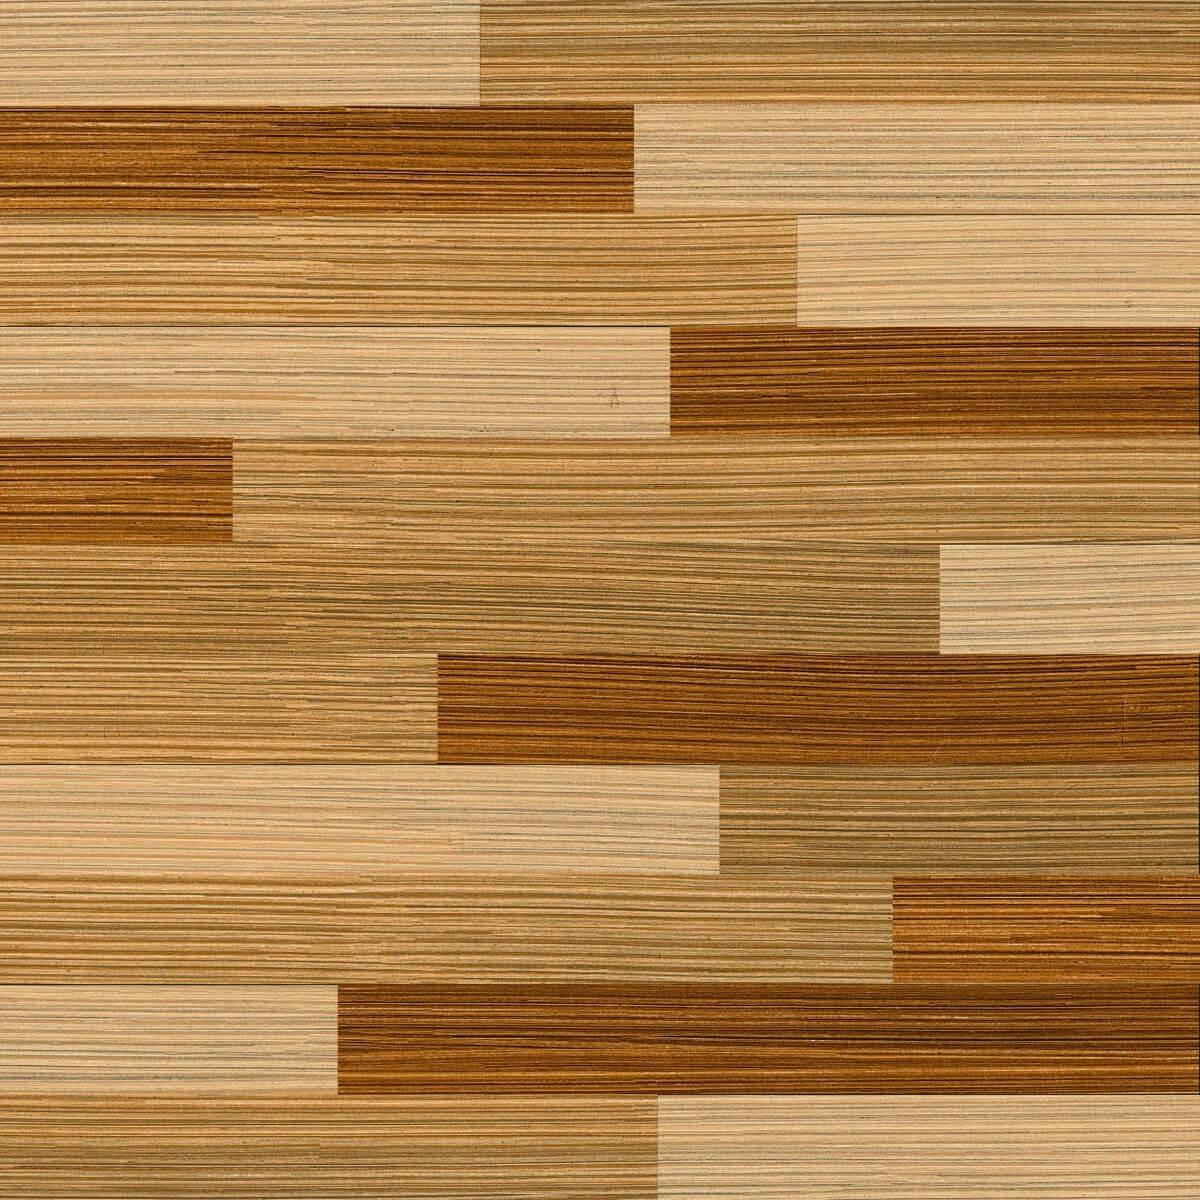 Brown Tiles for Bathroom Tiles, Kitchen Tiles, Dining Room Tiles